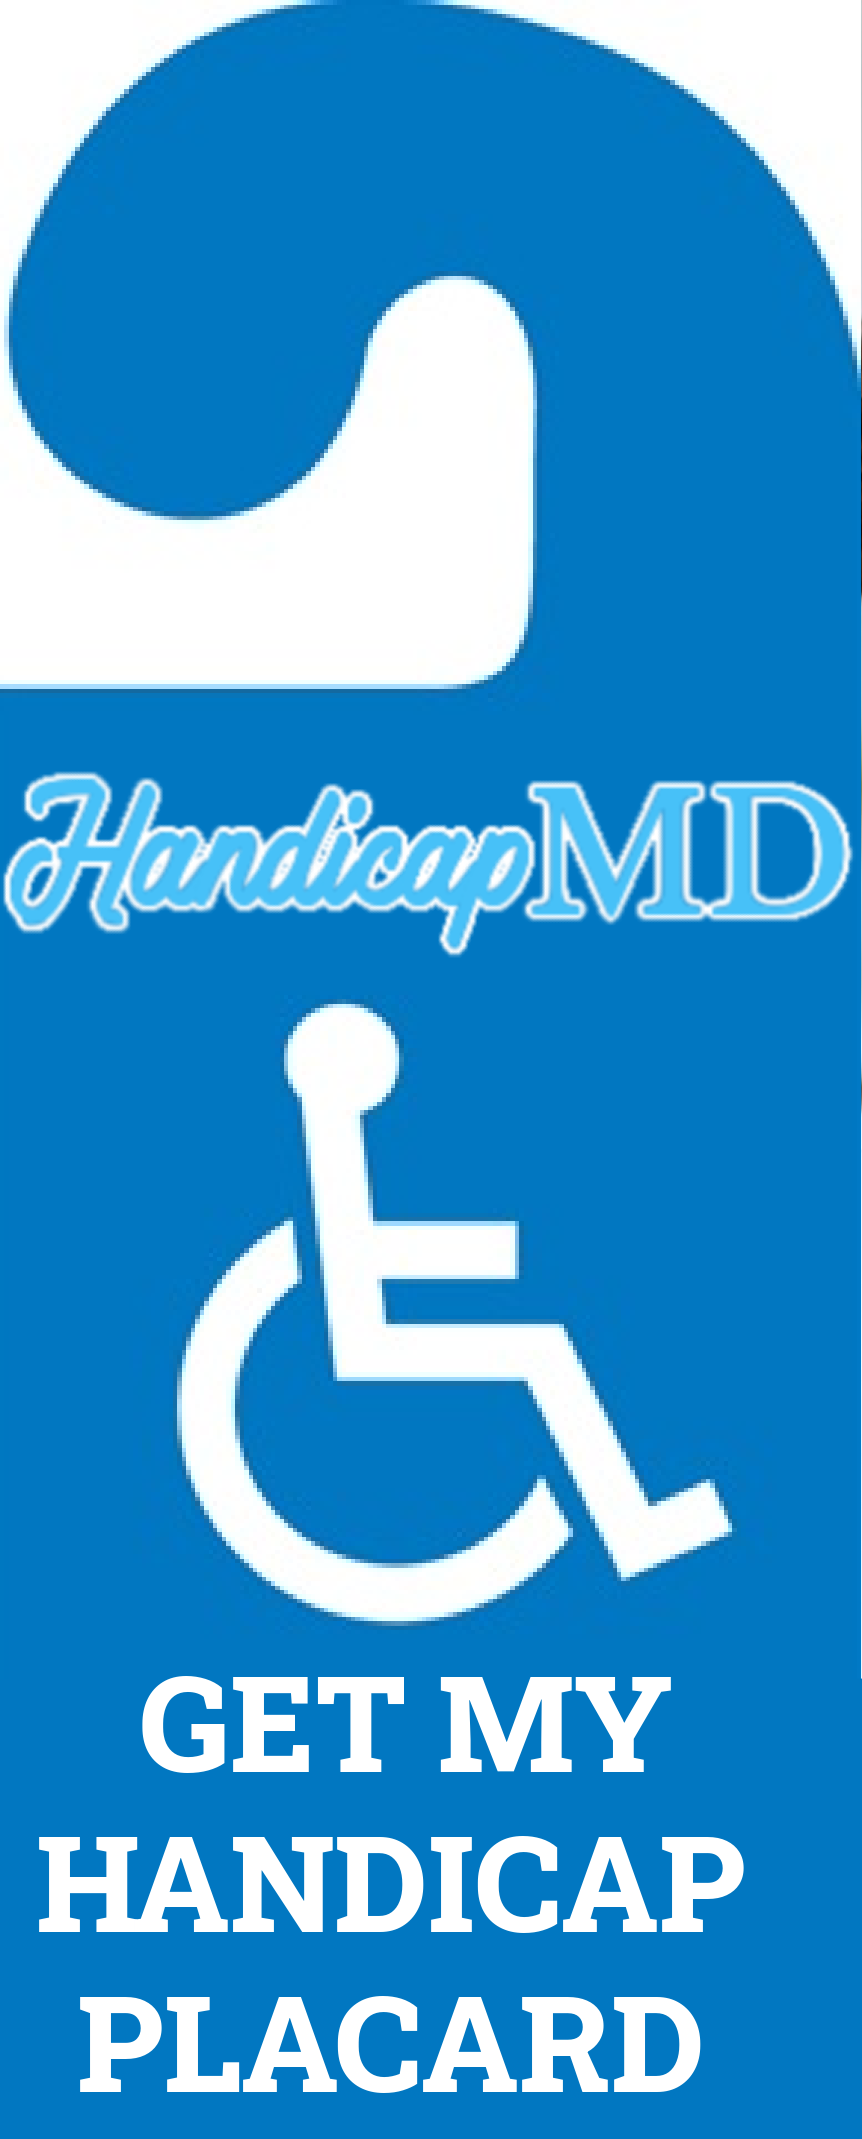 How To Get A Handicap Parking Placard Renewal in North Dakota